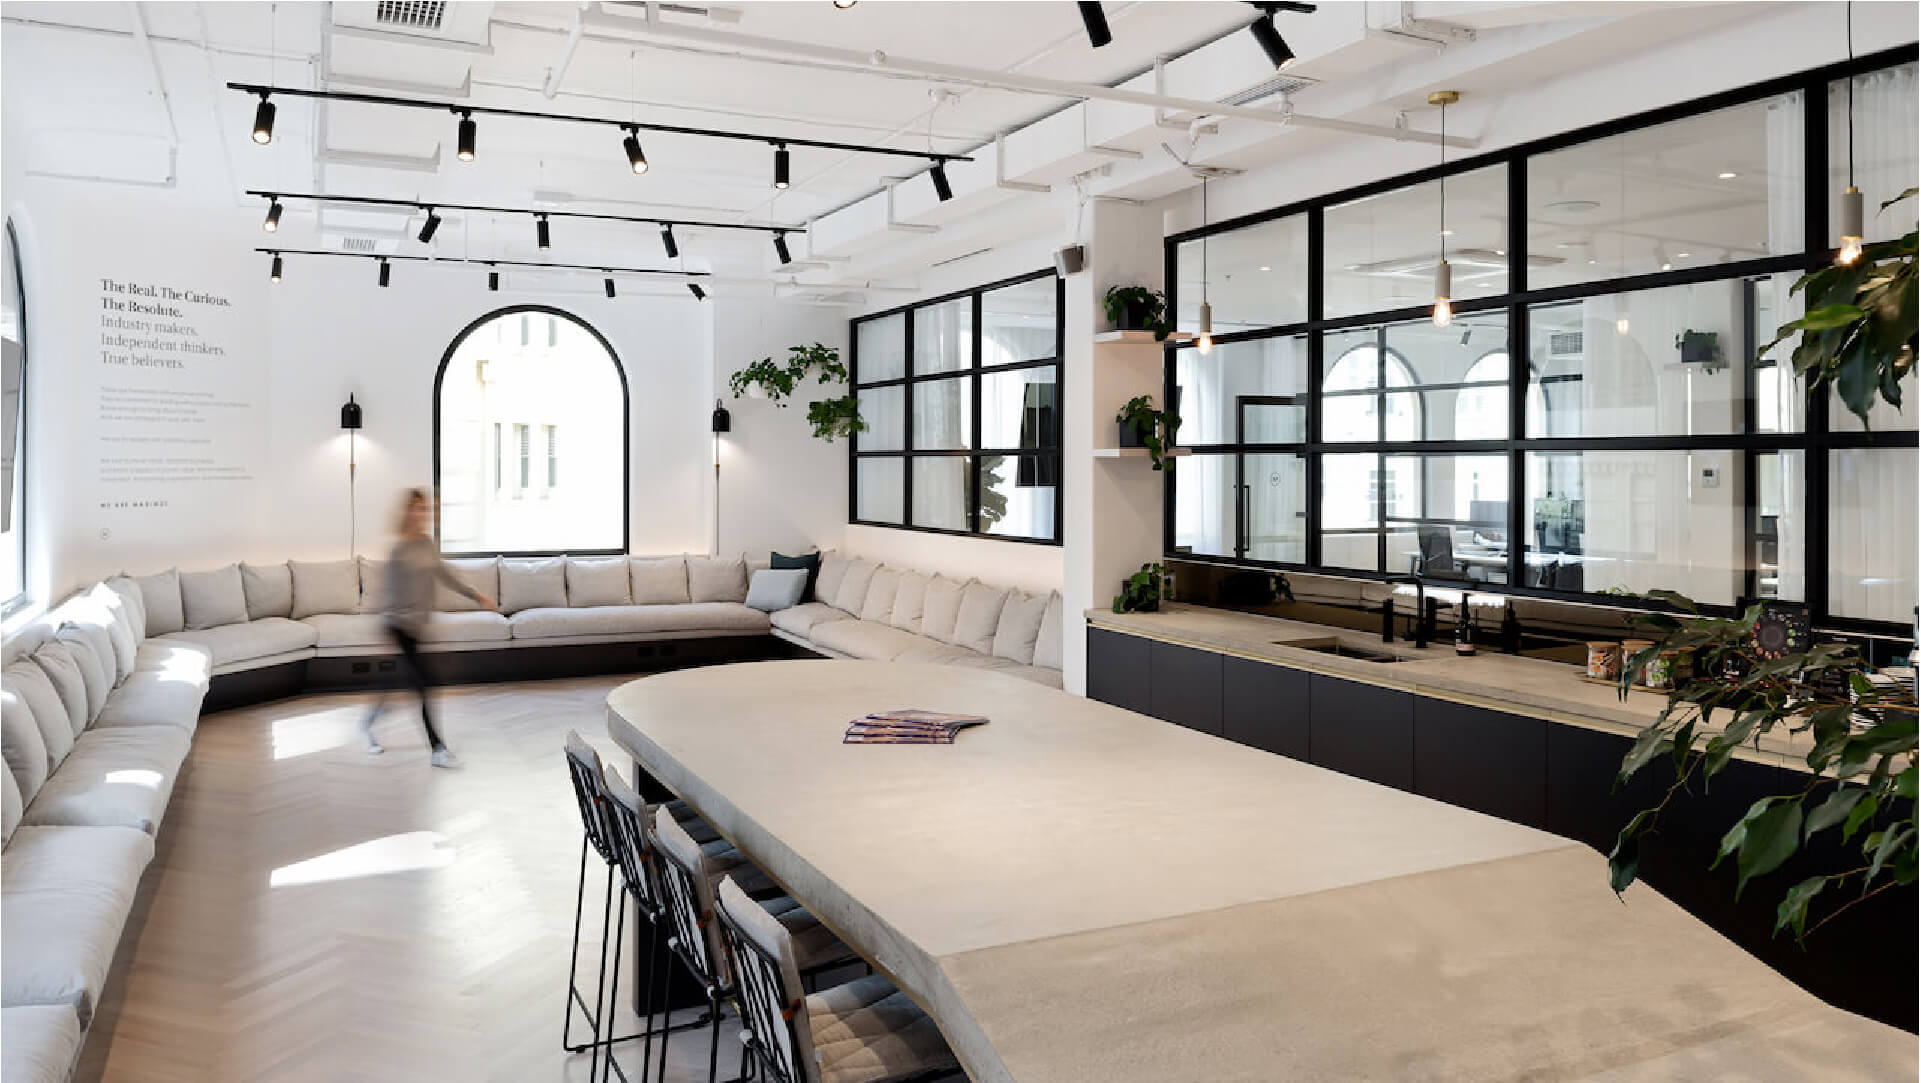 Siren Design - minimal interior office space